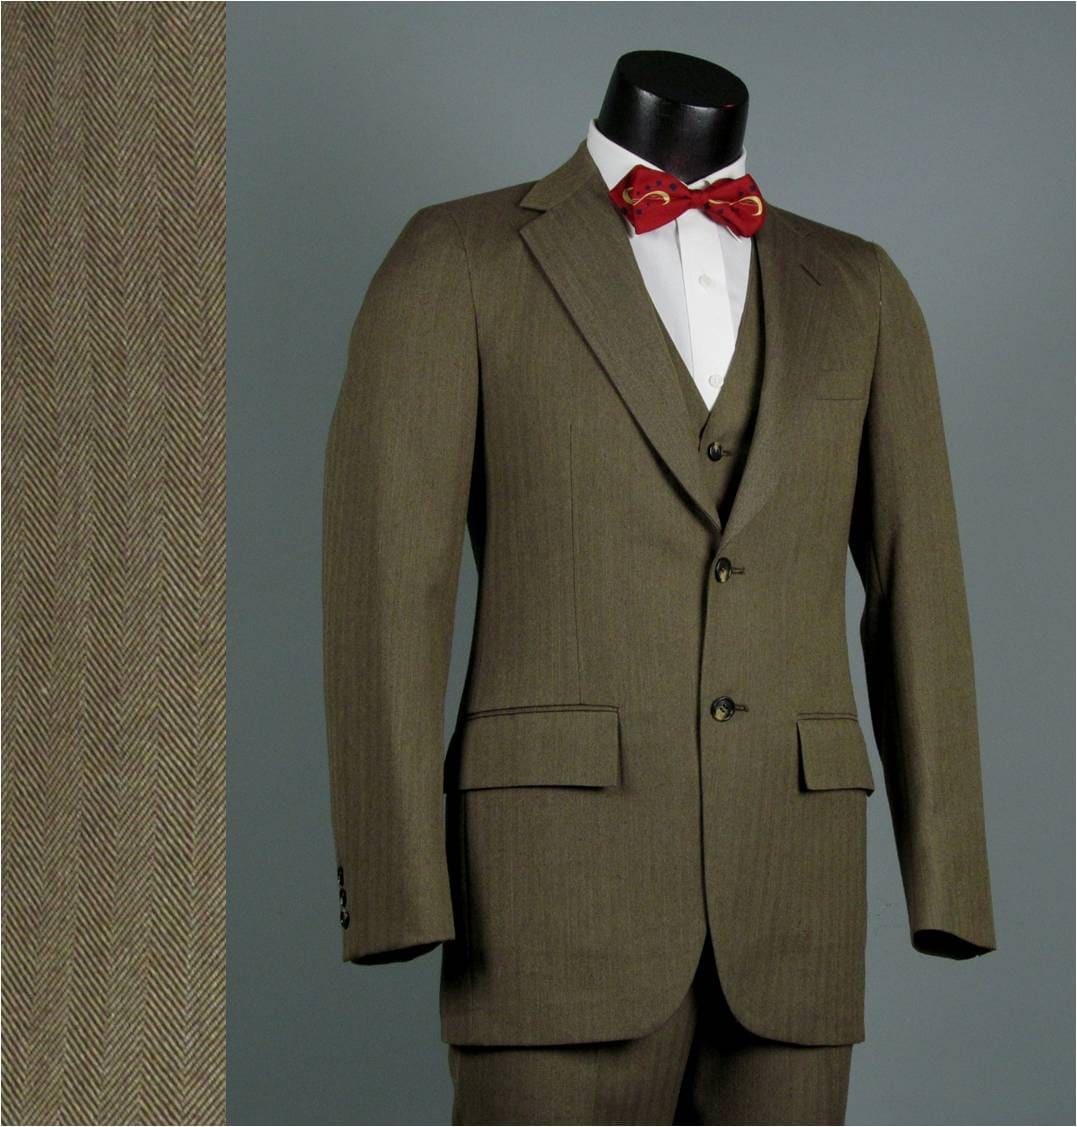 Vintage Mens Suit 1960s RICHMAN BROTHERS Light Brown 1960s Mens Suits